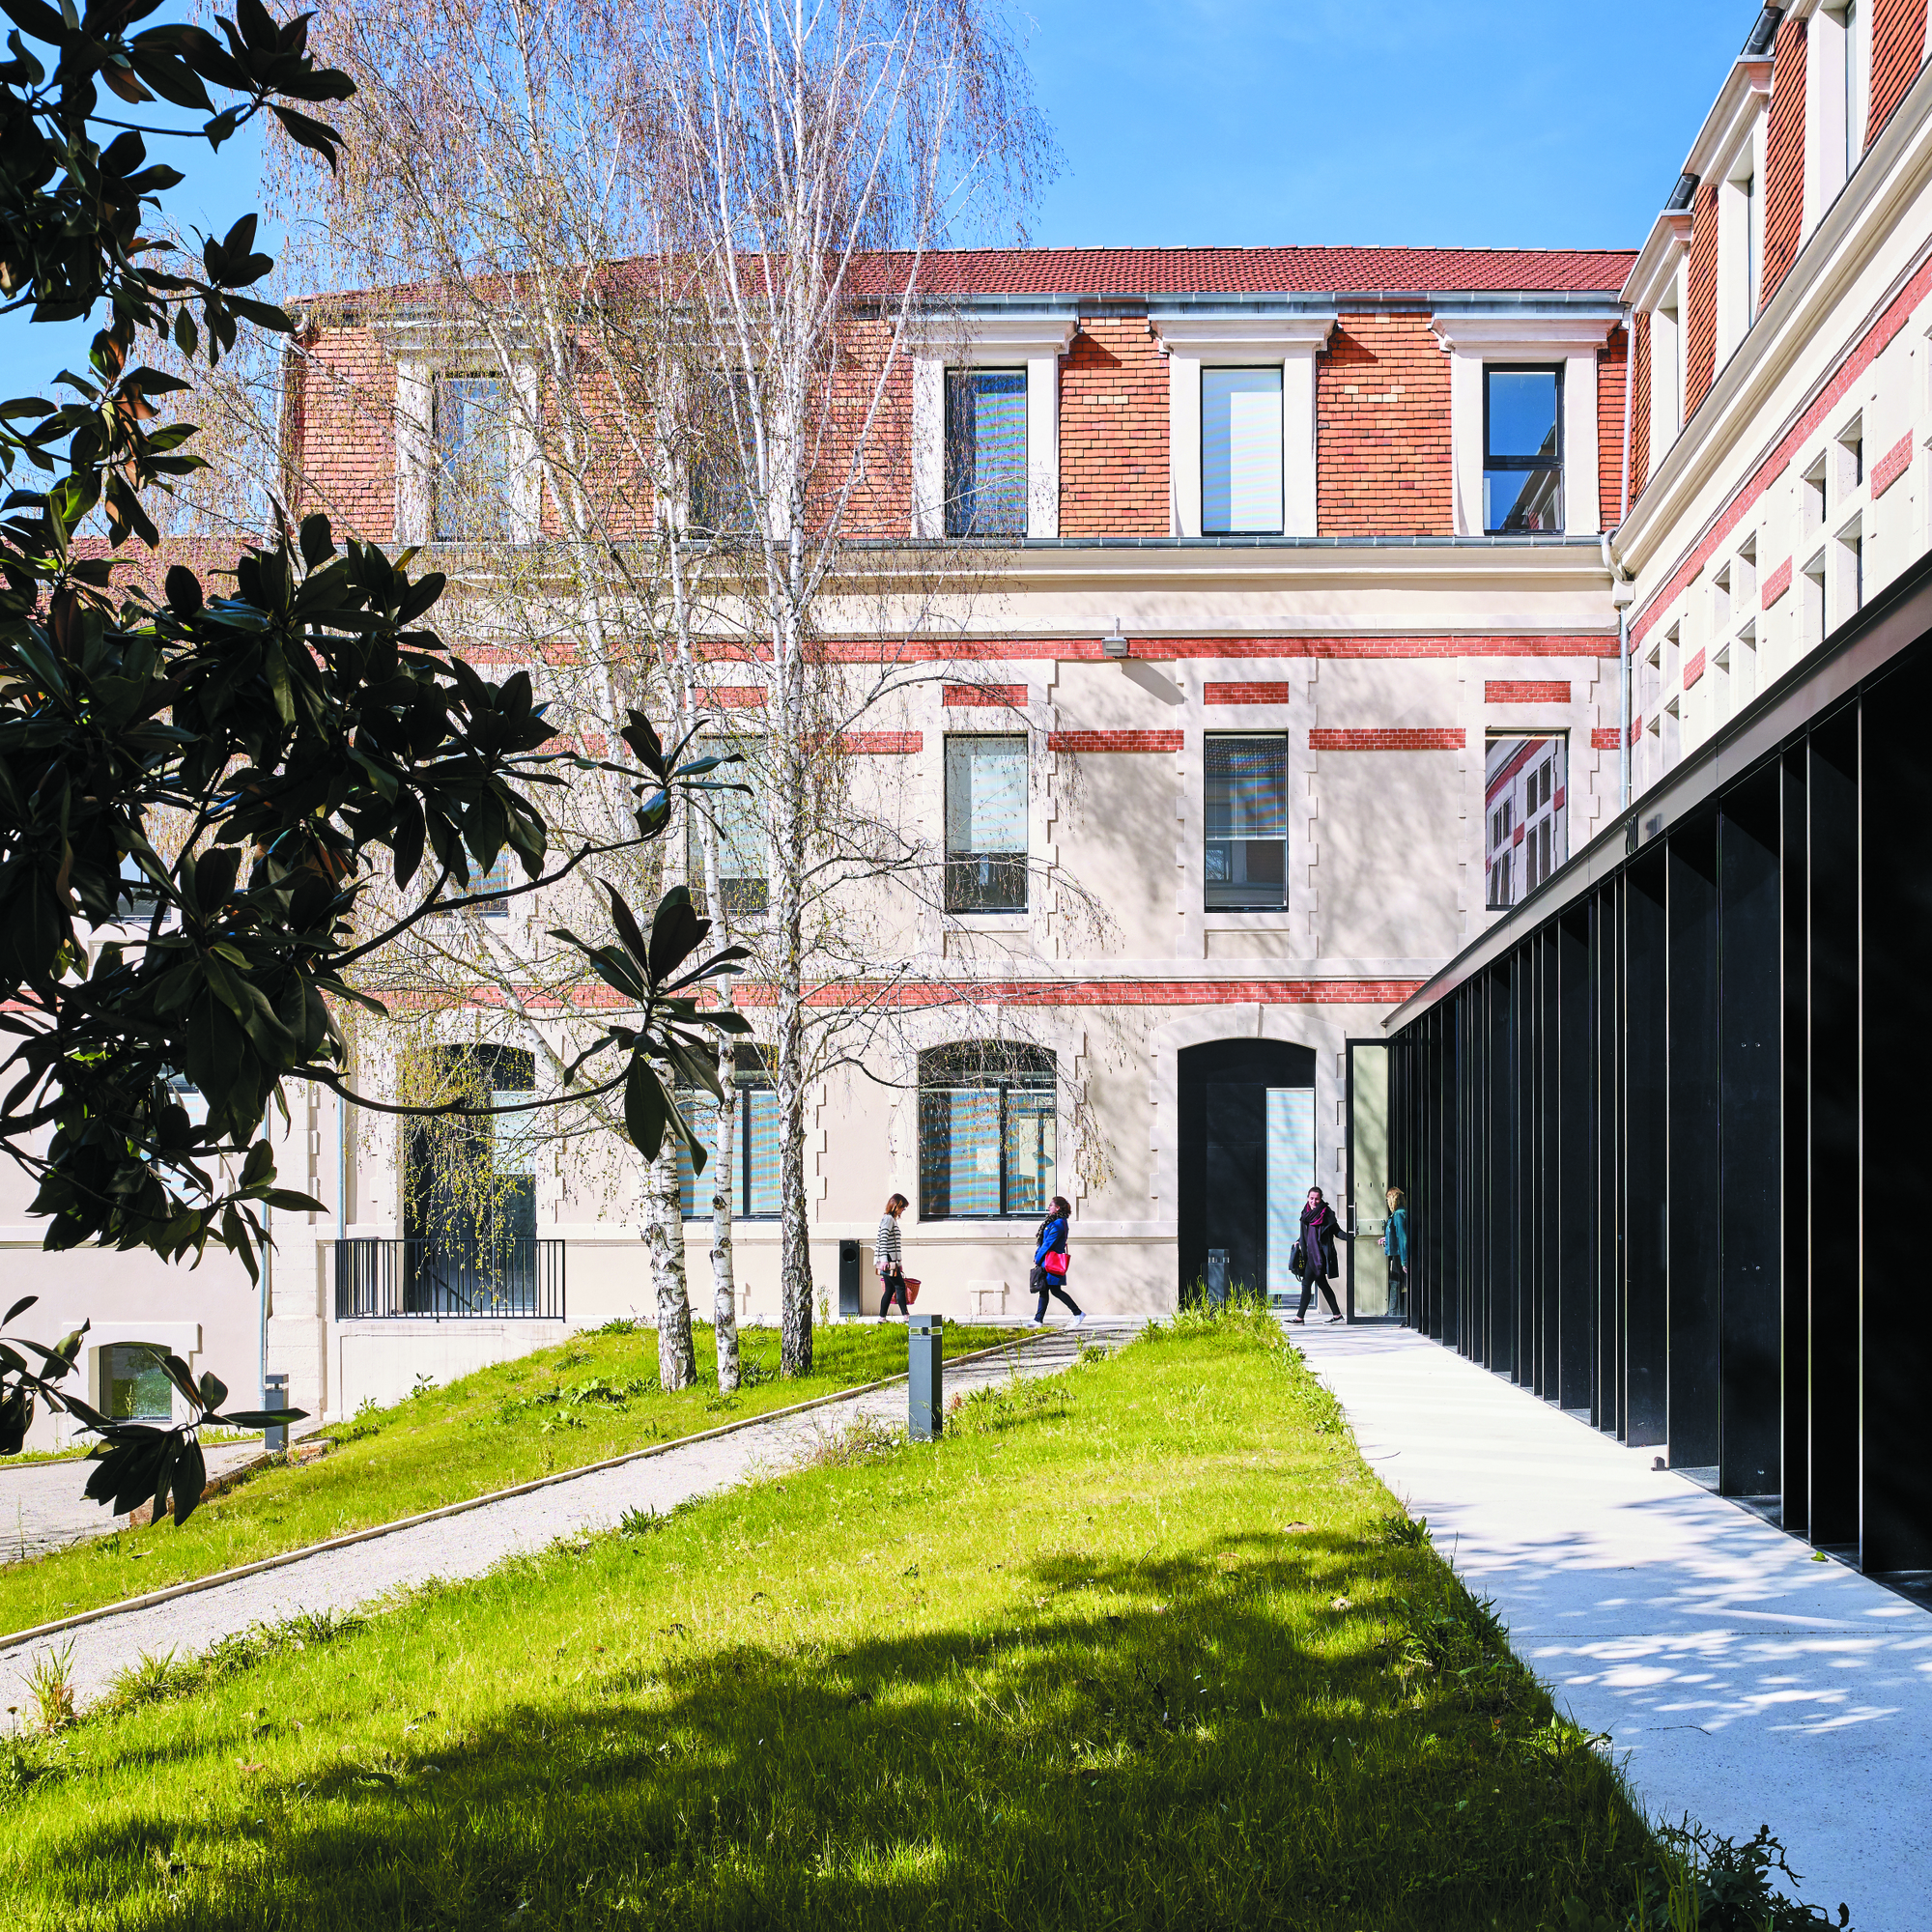 University Centre, Cahors, France - Image 4